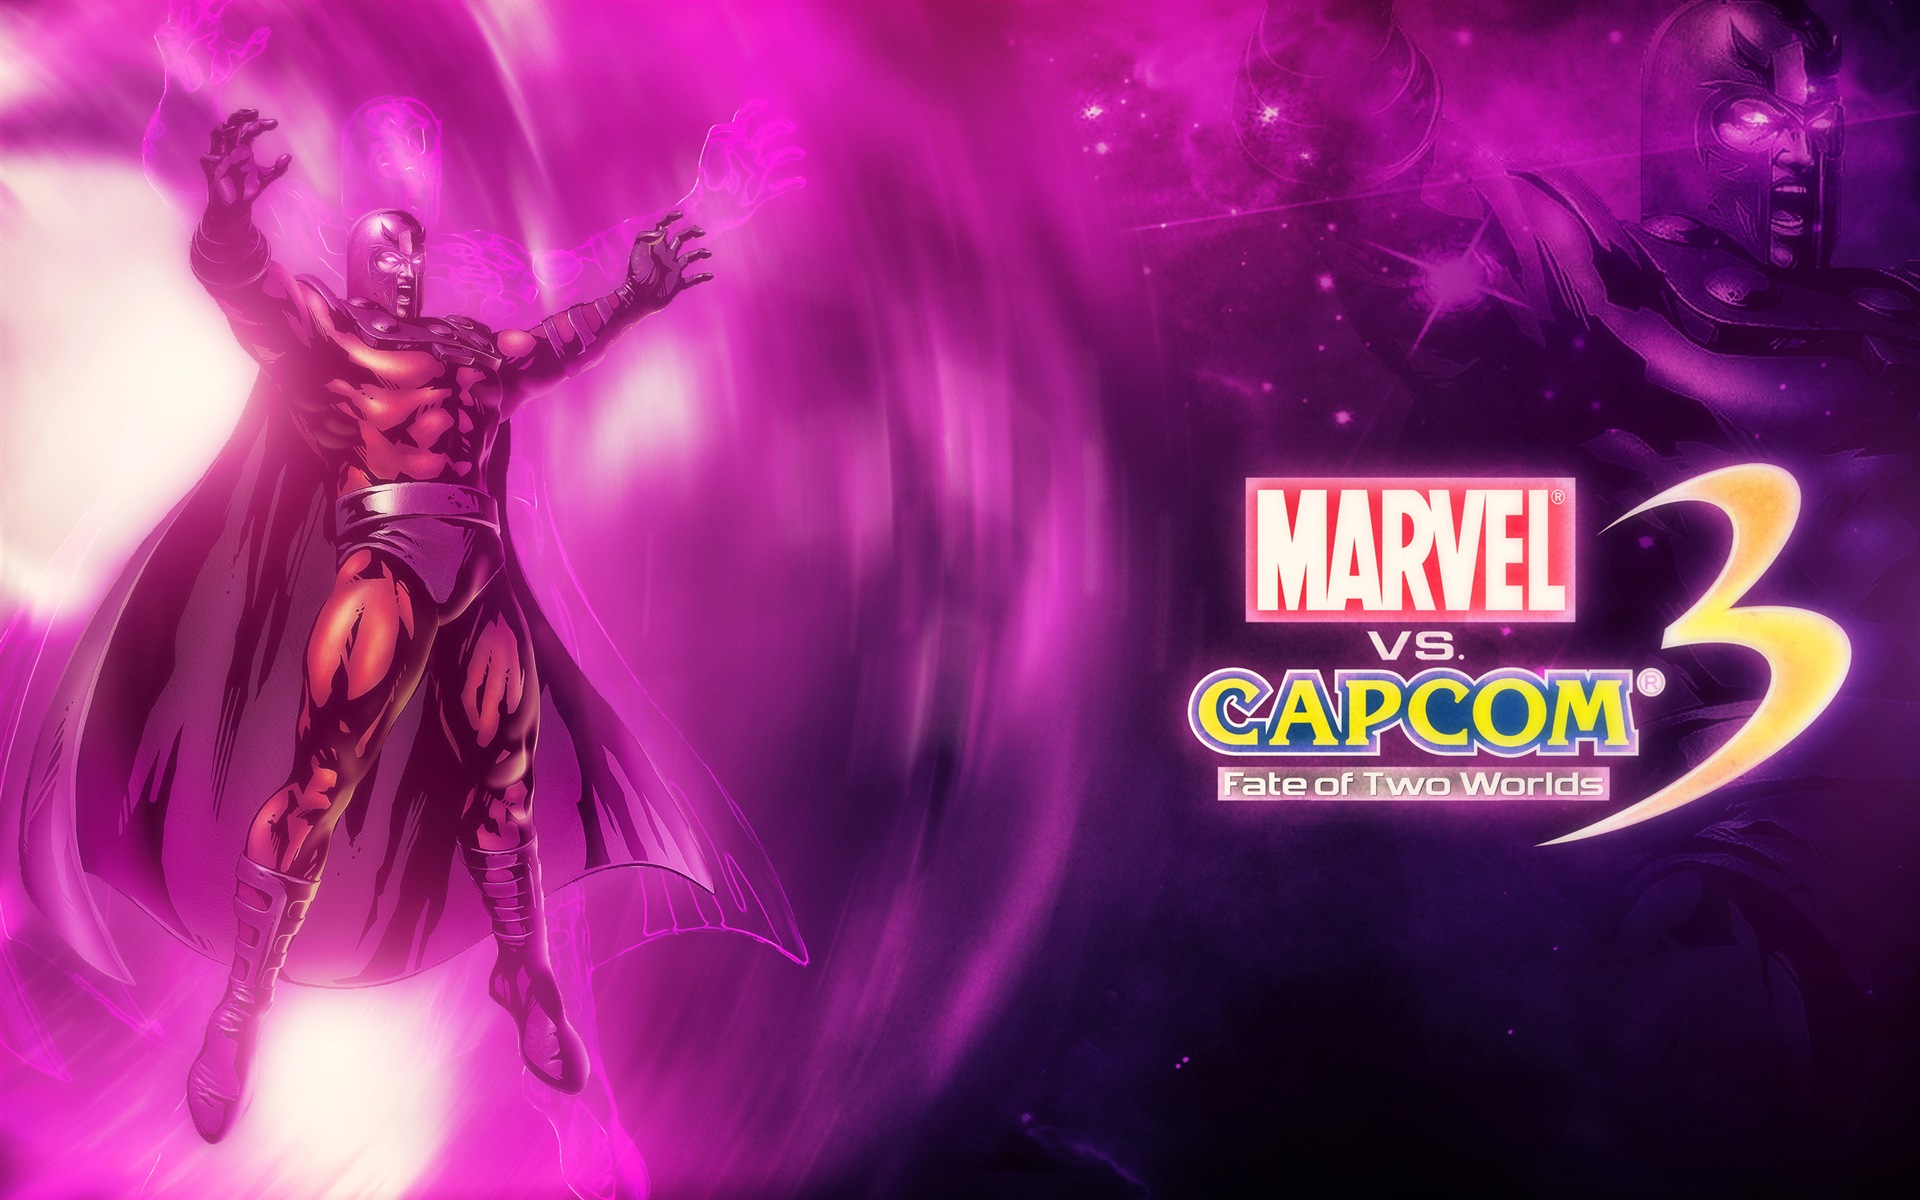 Marvel VS. Capcom 3: Fate of Two Worlds 漫畫英雄VS.卡普空3 高清遊戲壁紙 #7 - 1920x1200